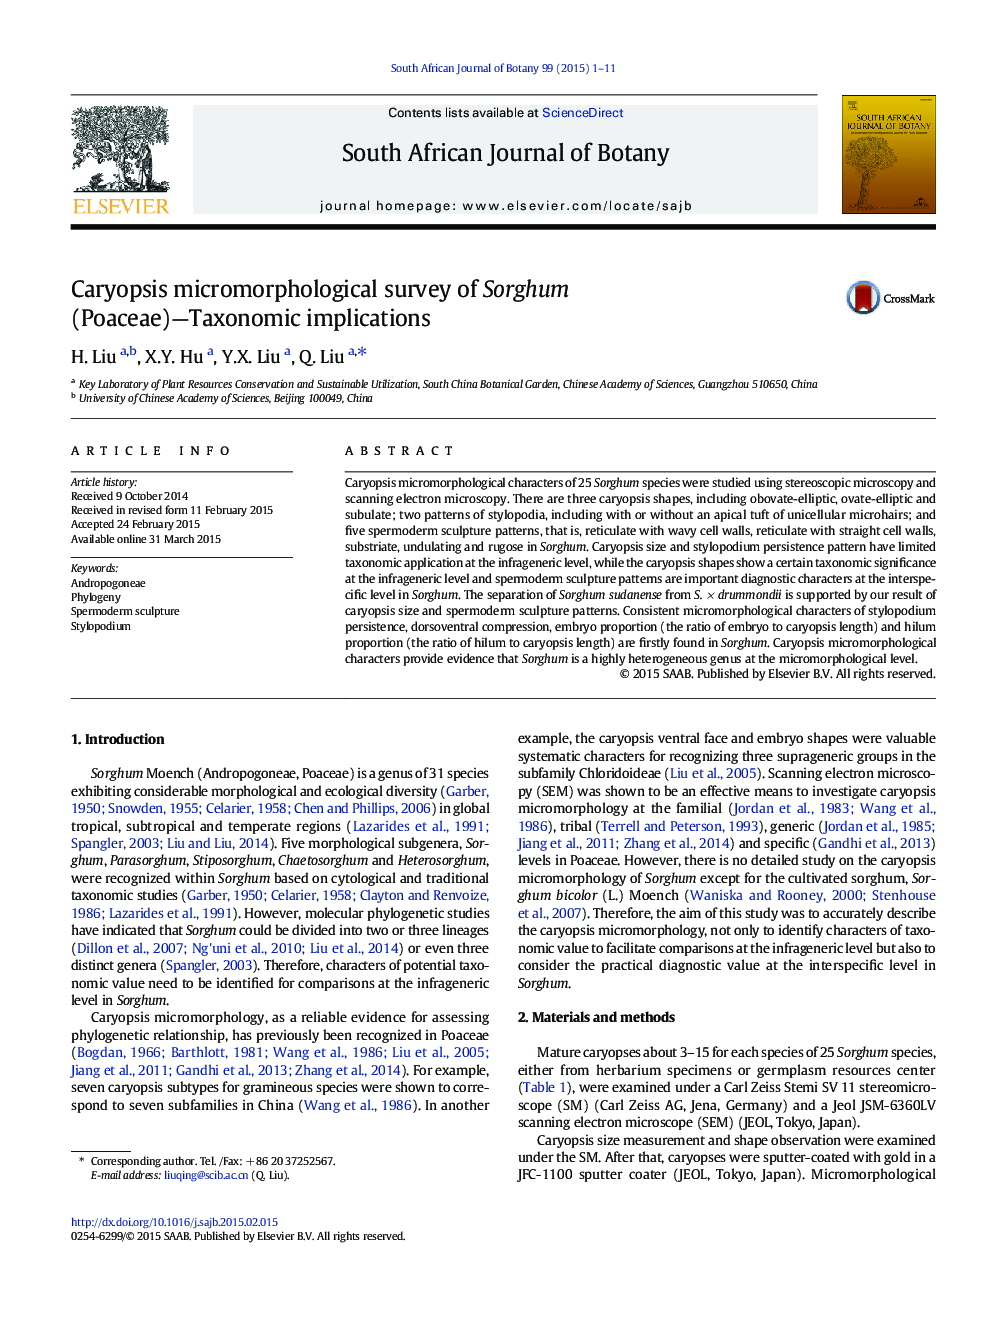 Caryopsis micromorphological survey of Sorghum (Poaceae)—Taxonomic implications